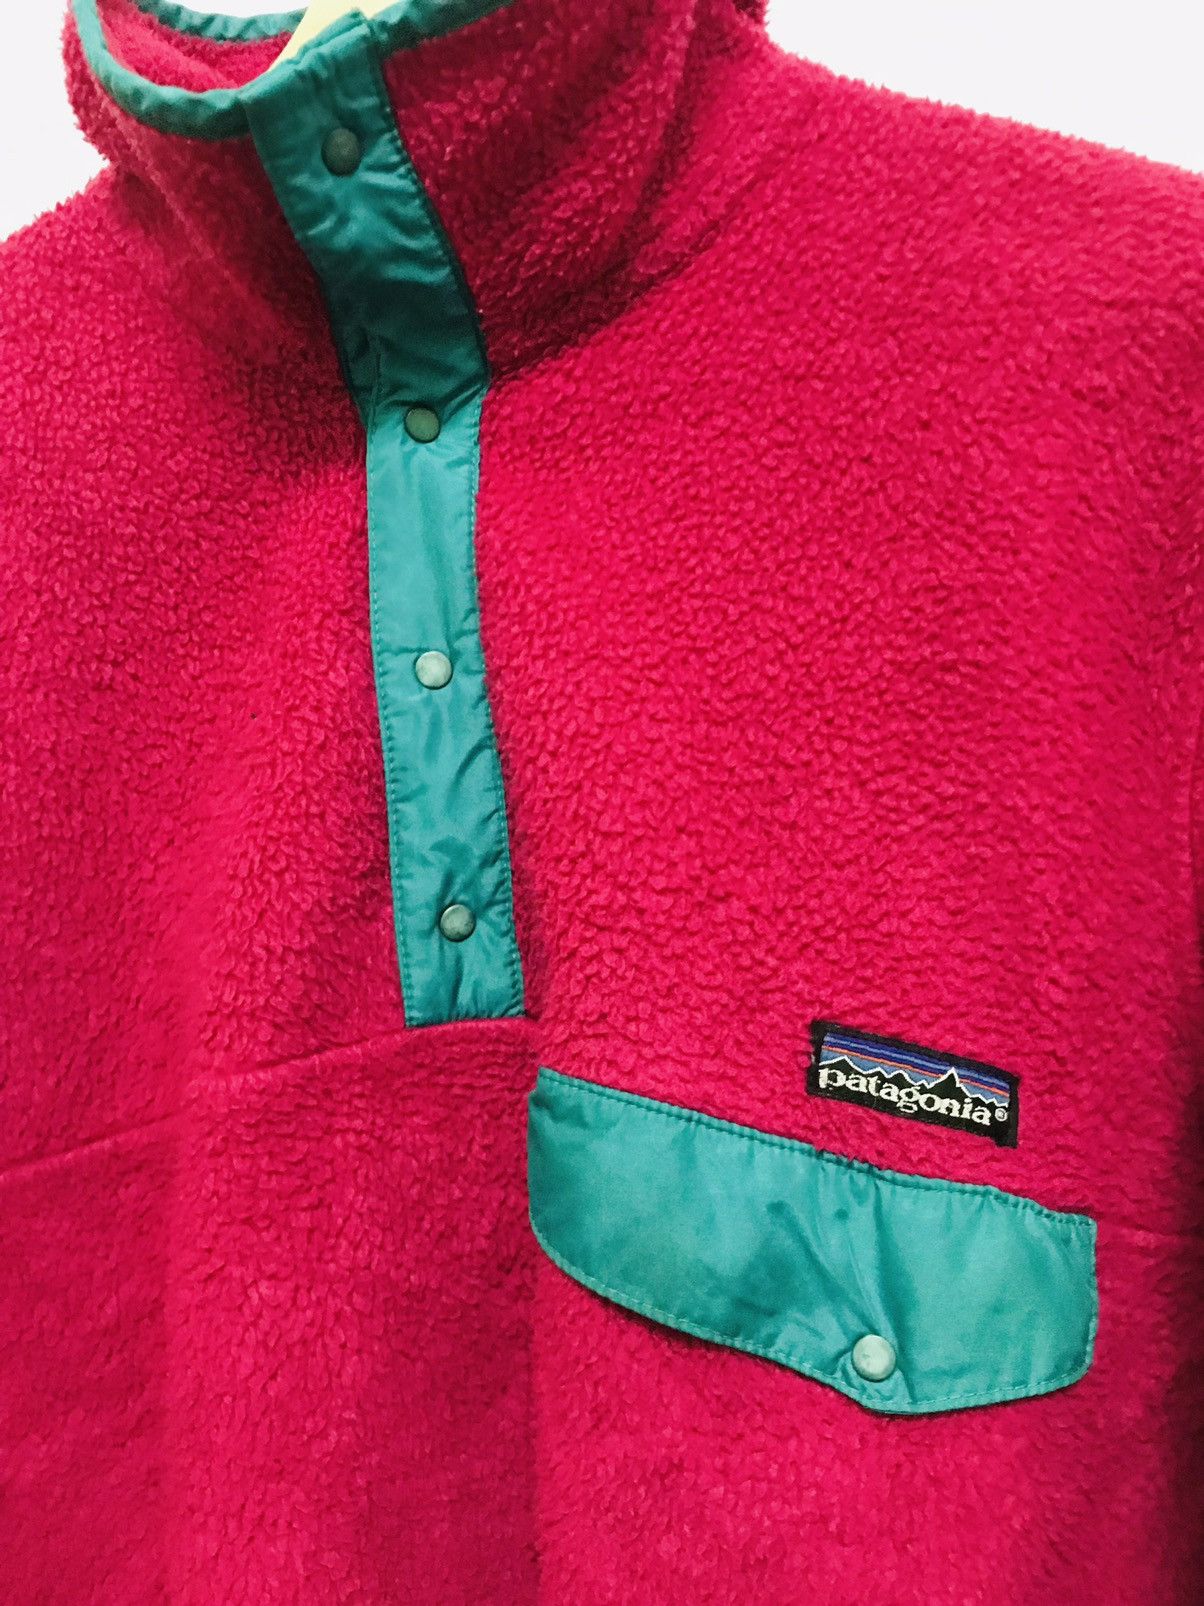 Patagonia Fleece Pullover Sweatshirt - 4